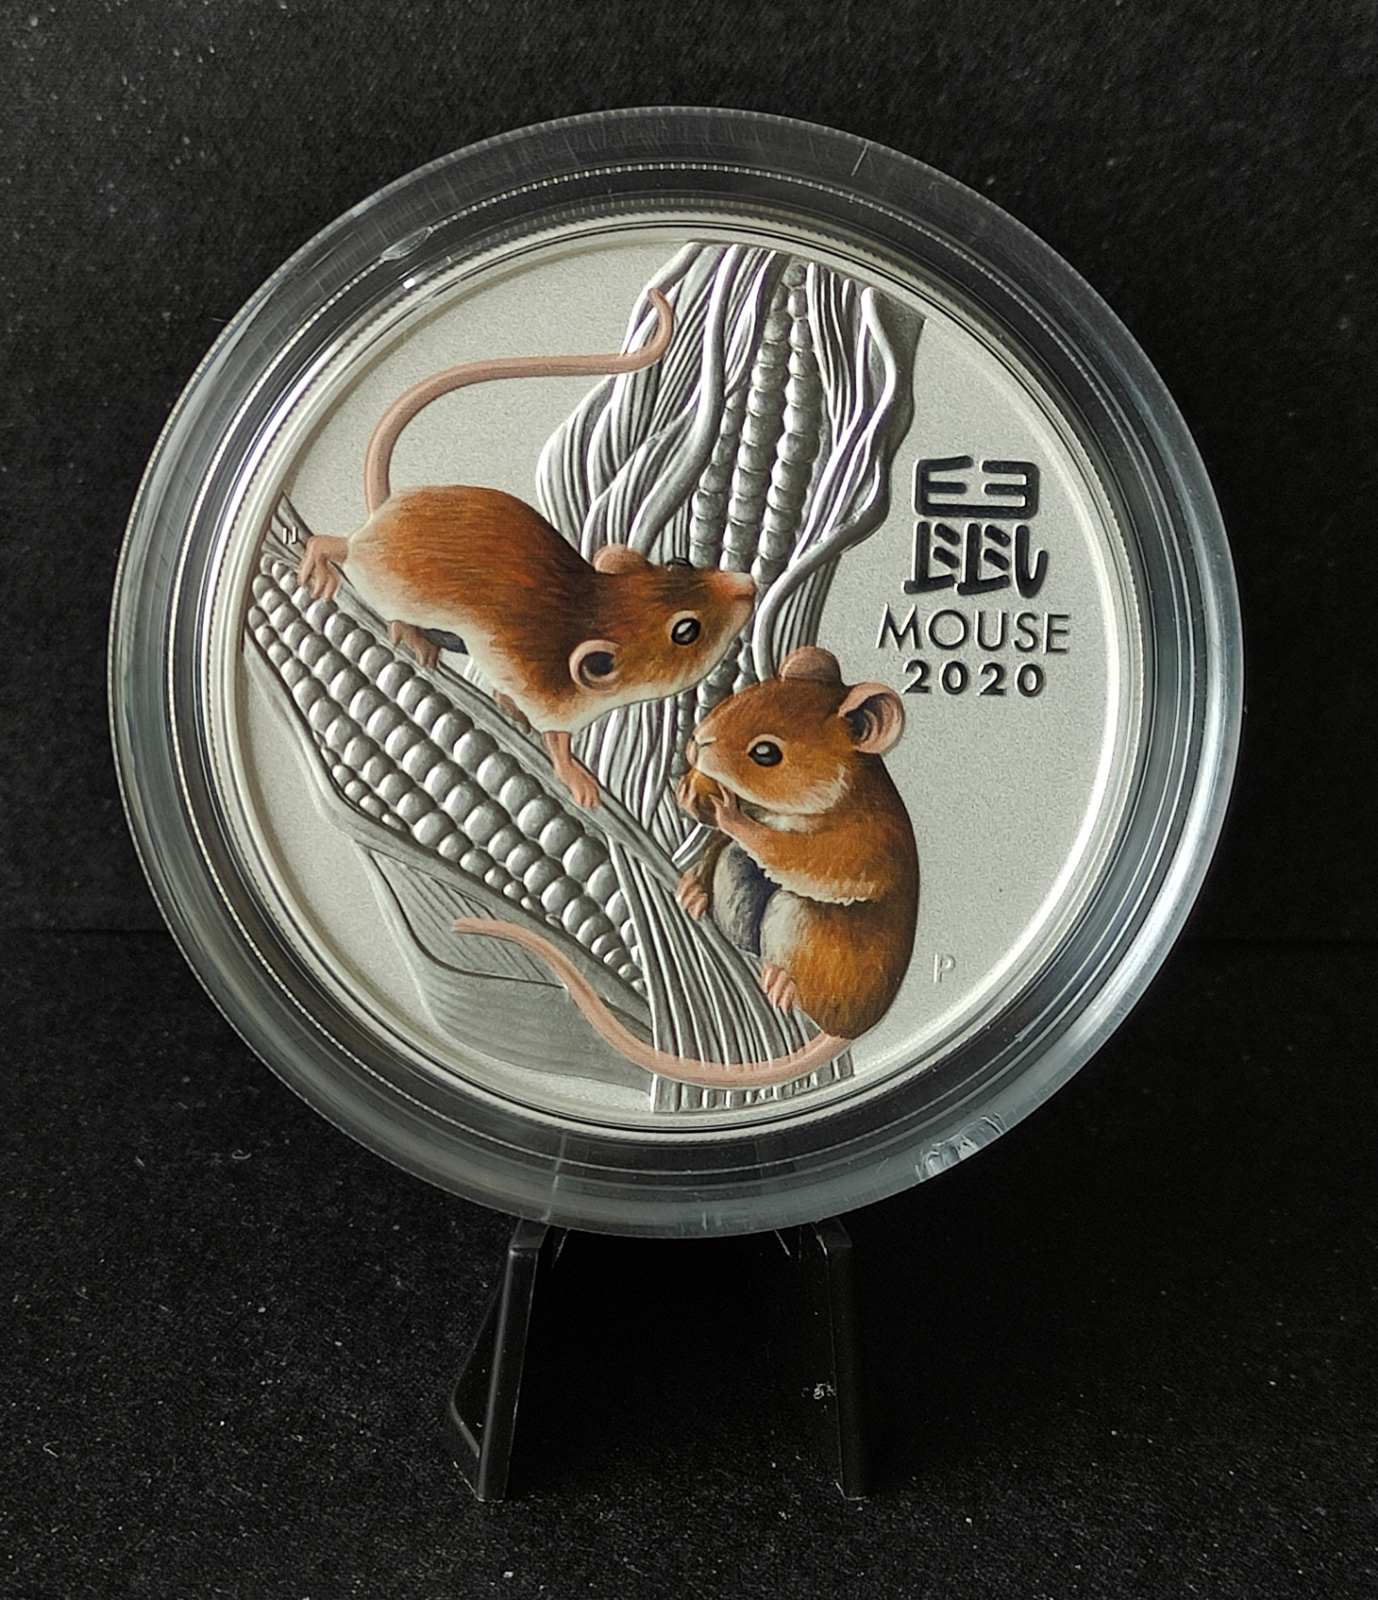 2020 Australia Lunar Mouse (Series III) 2 oz Colorized Silver Coin BU in Capsule